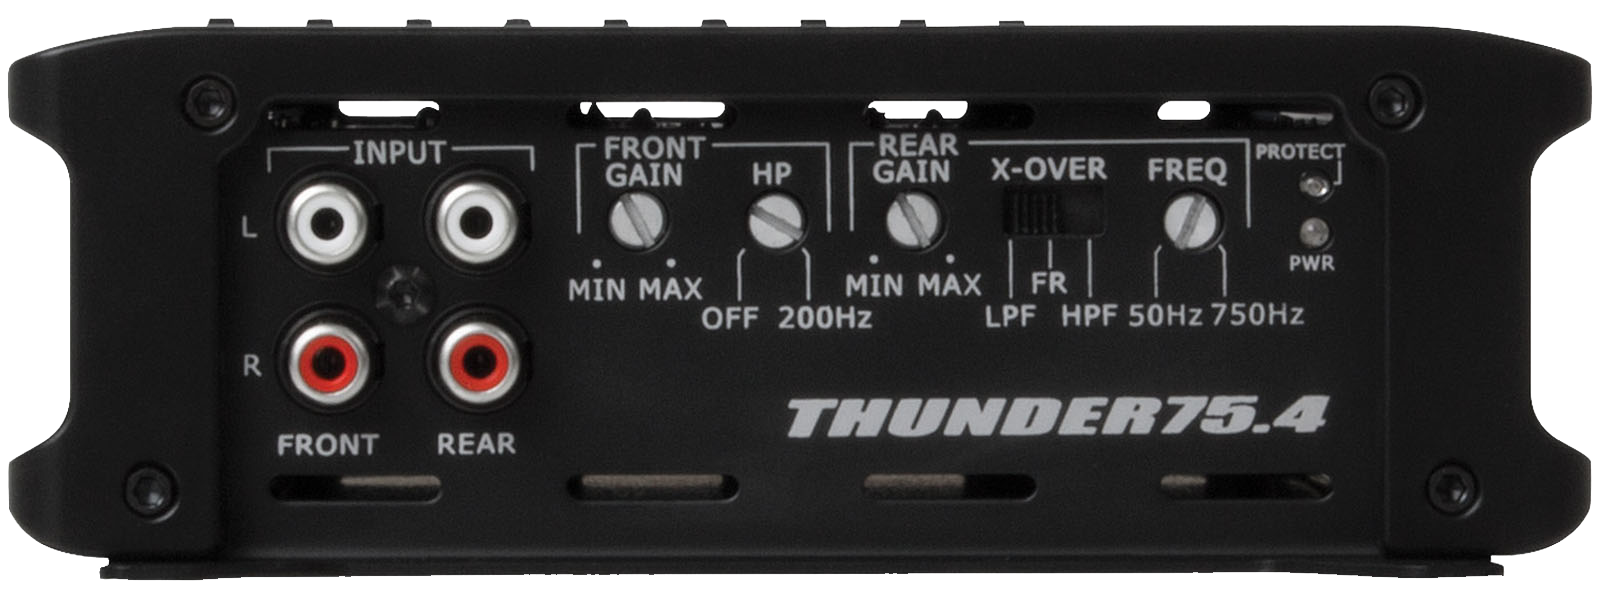 MTX THUNDER 75.4 Car Amplifier